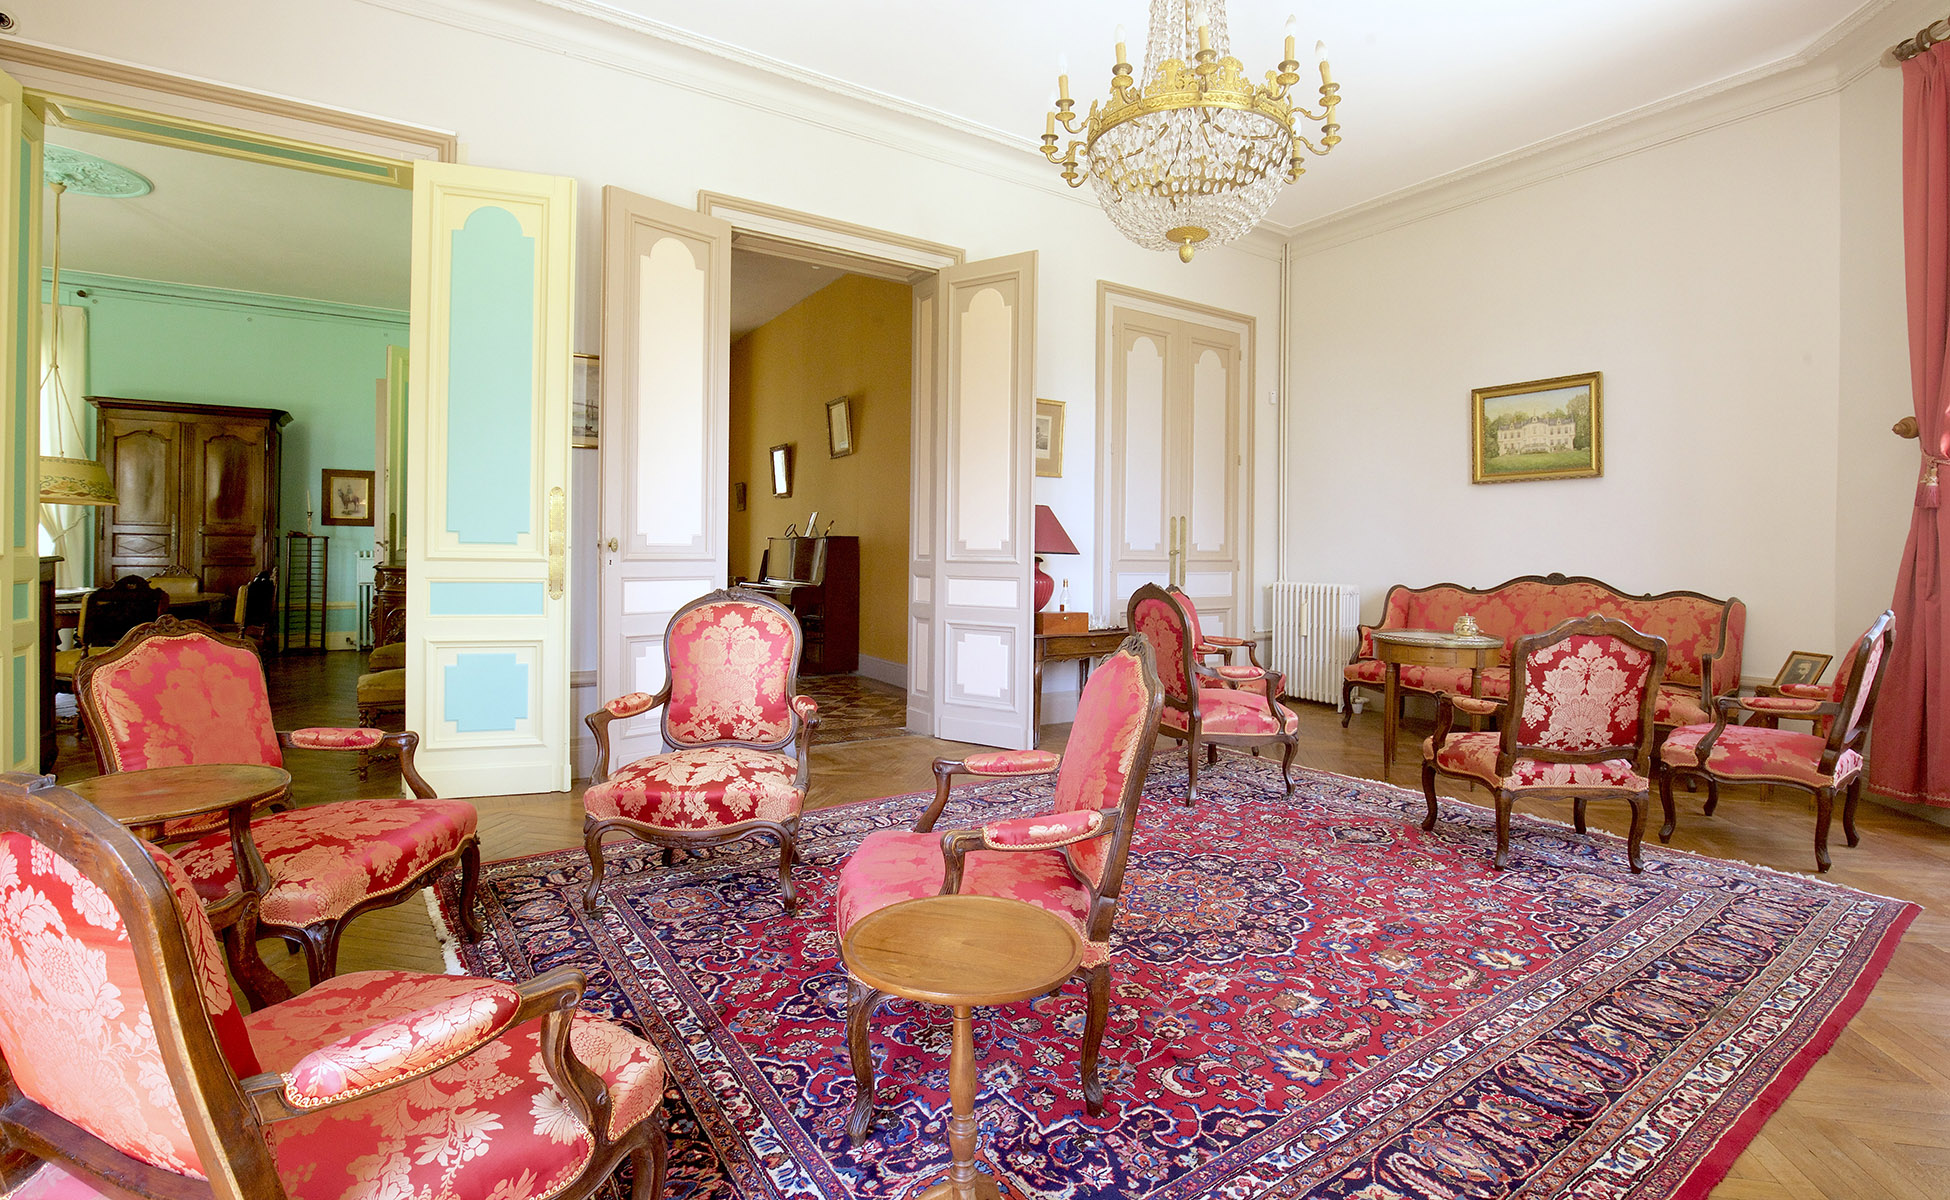 Lovelydays luxury service apartment rental - Libourne - Chateau de JUNAYME - Lovelysuite - 7 bedrooms - 6 bathrooms - Double living room - bb0562c05336 - Lovelydays